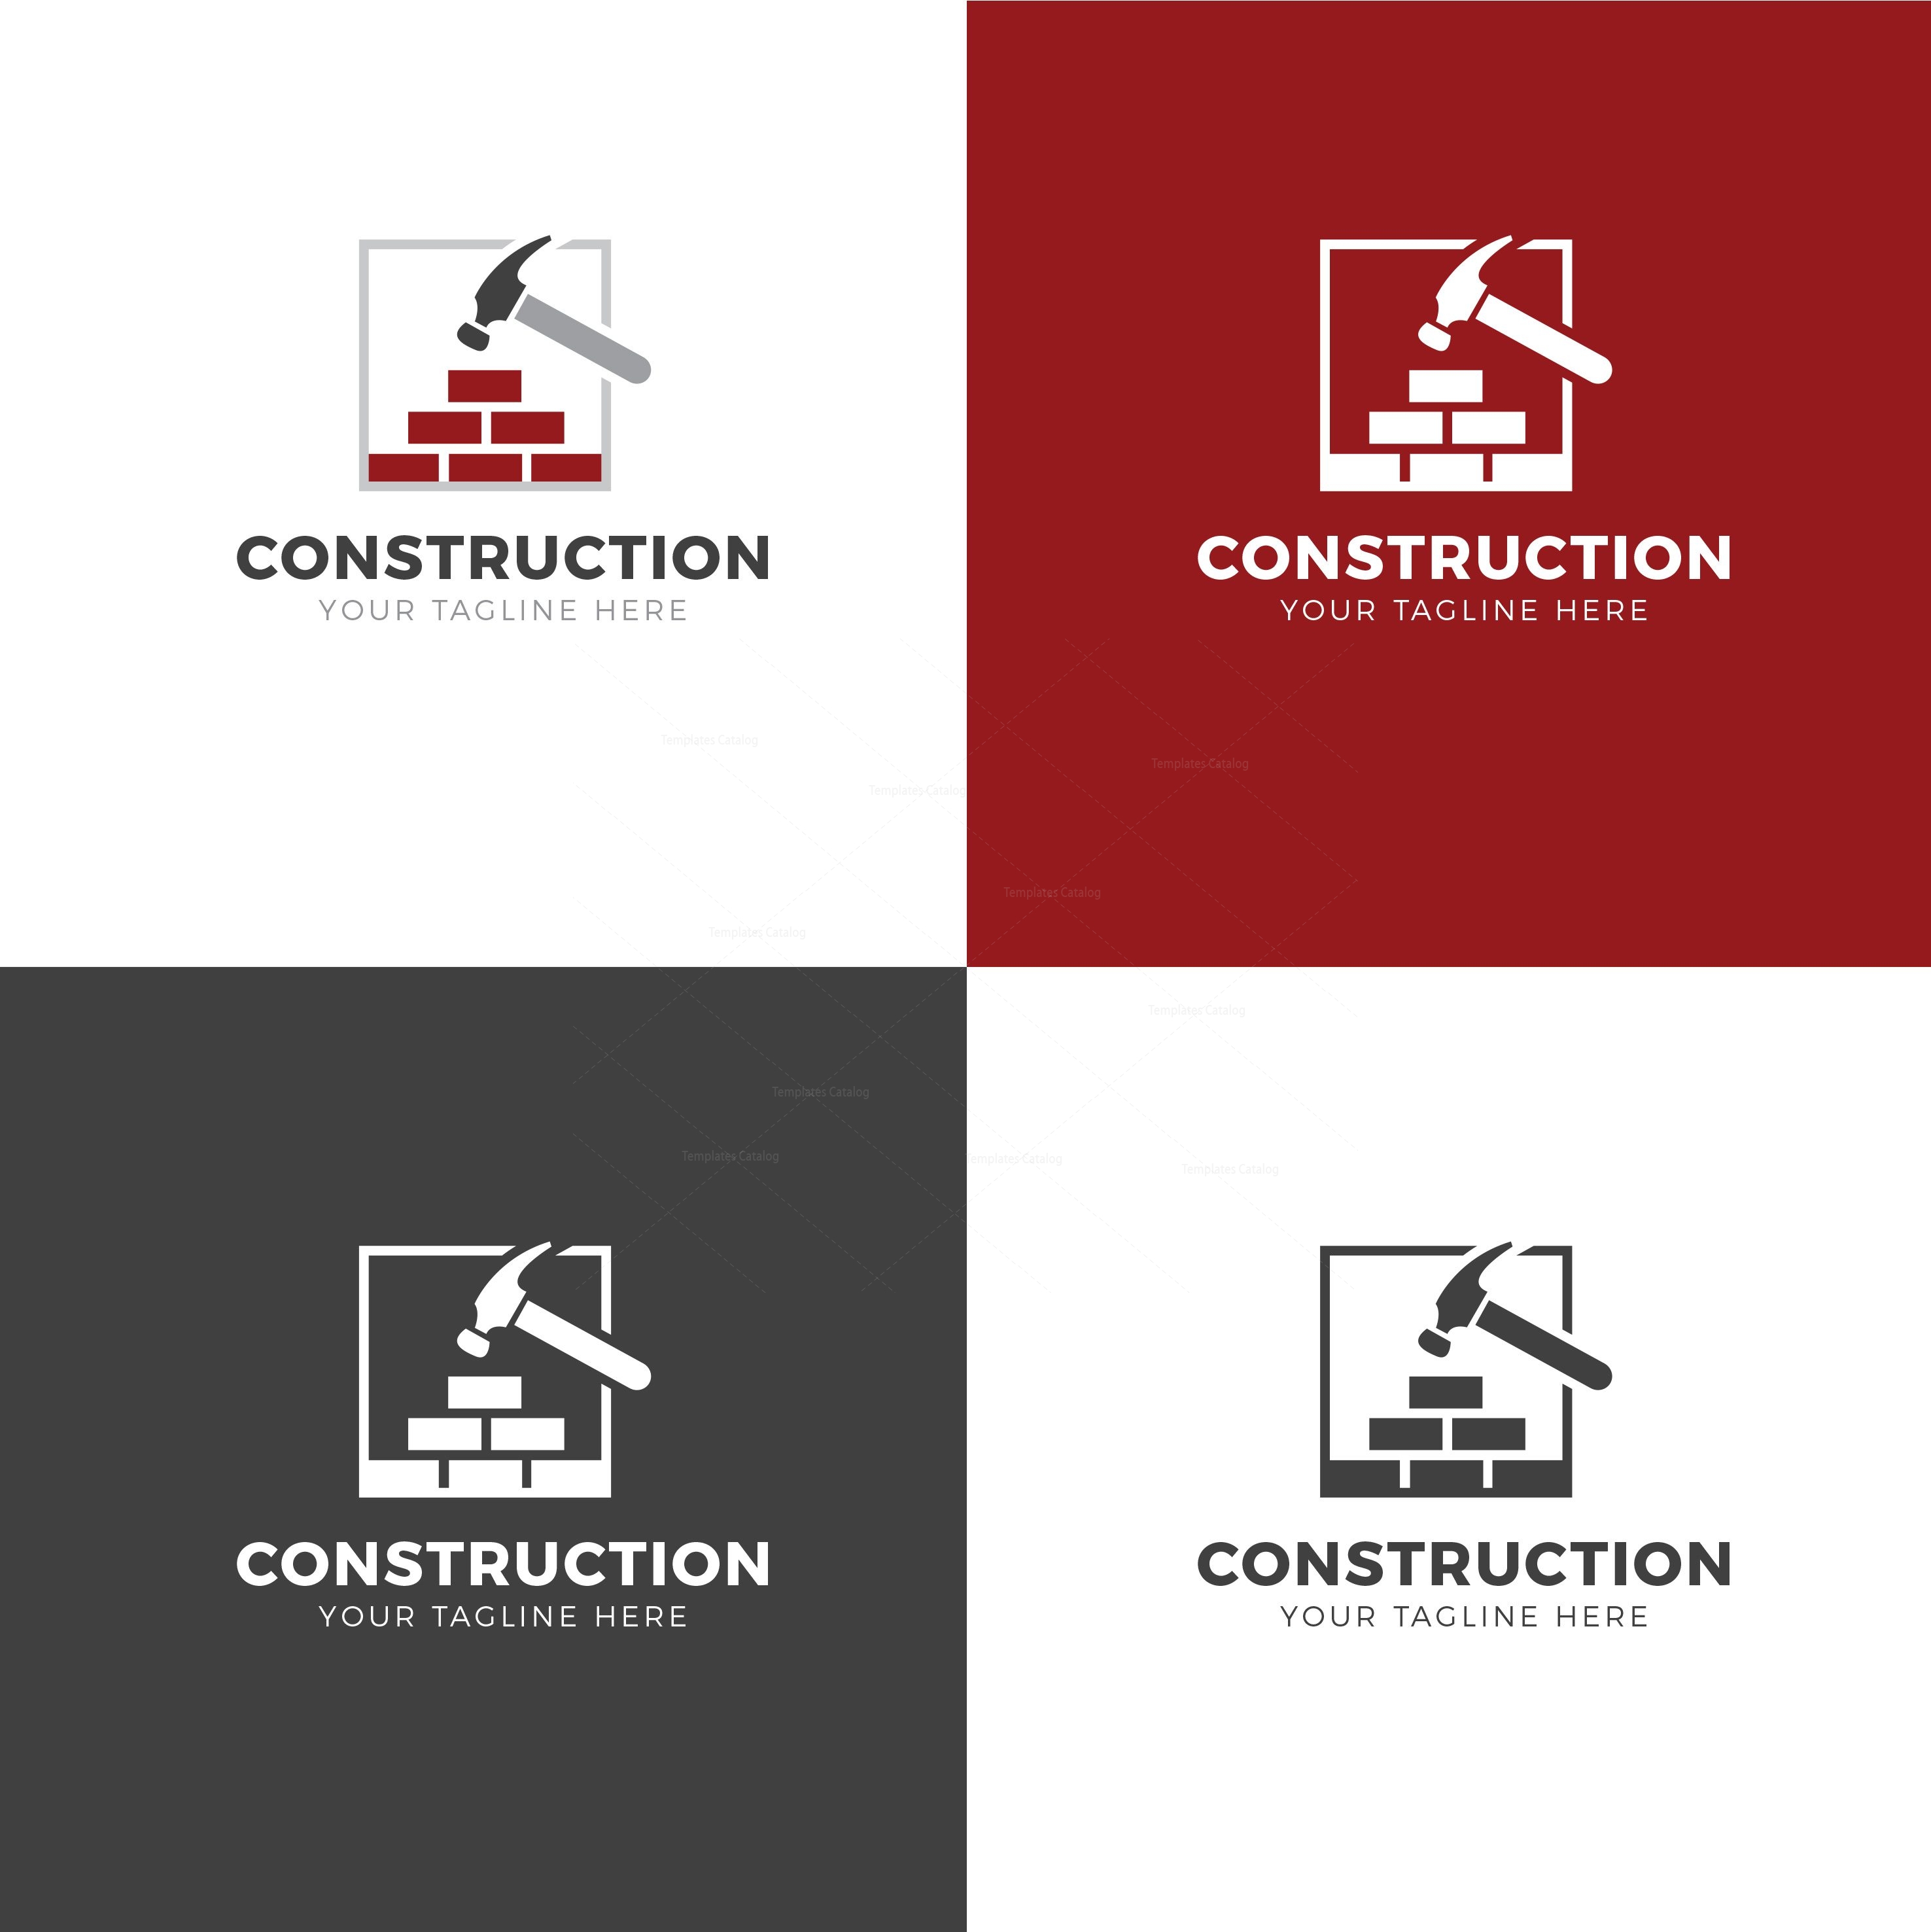 Construction Creative Logo Design Template 001740 - Template Catalog